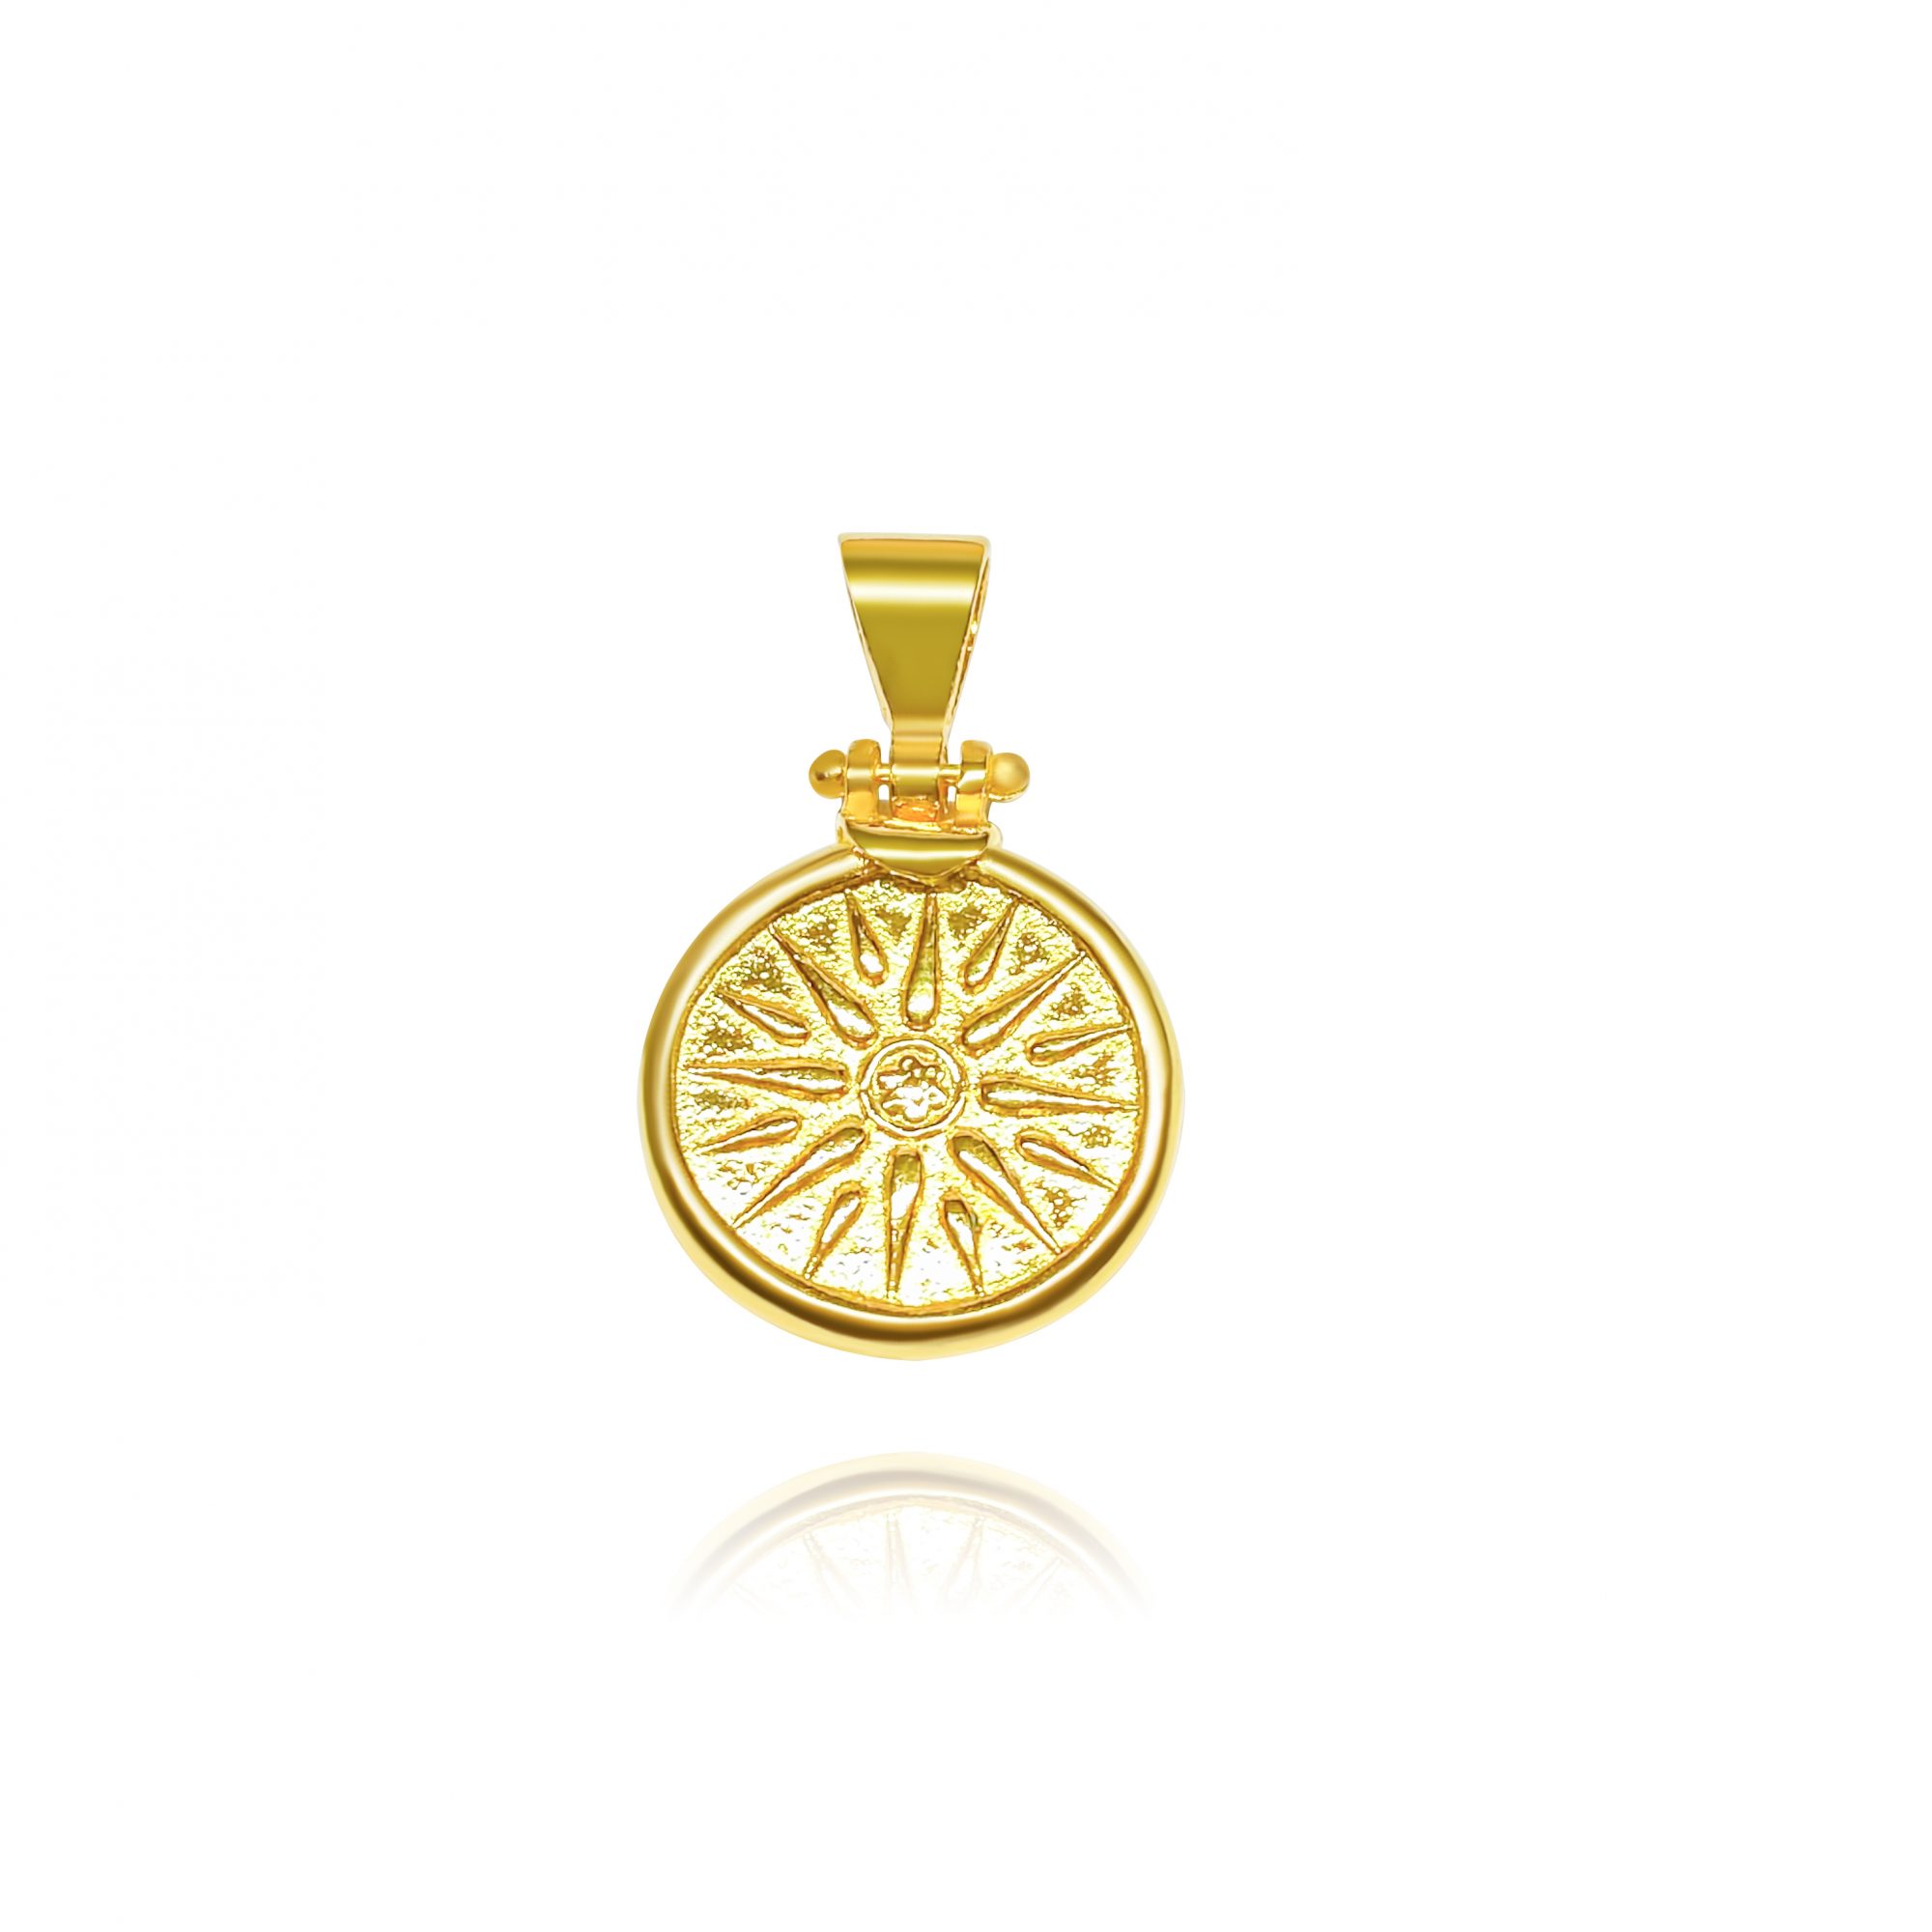 Vergina star gold plated pendant